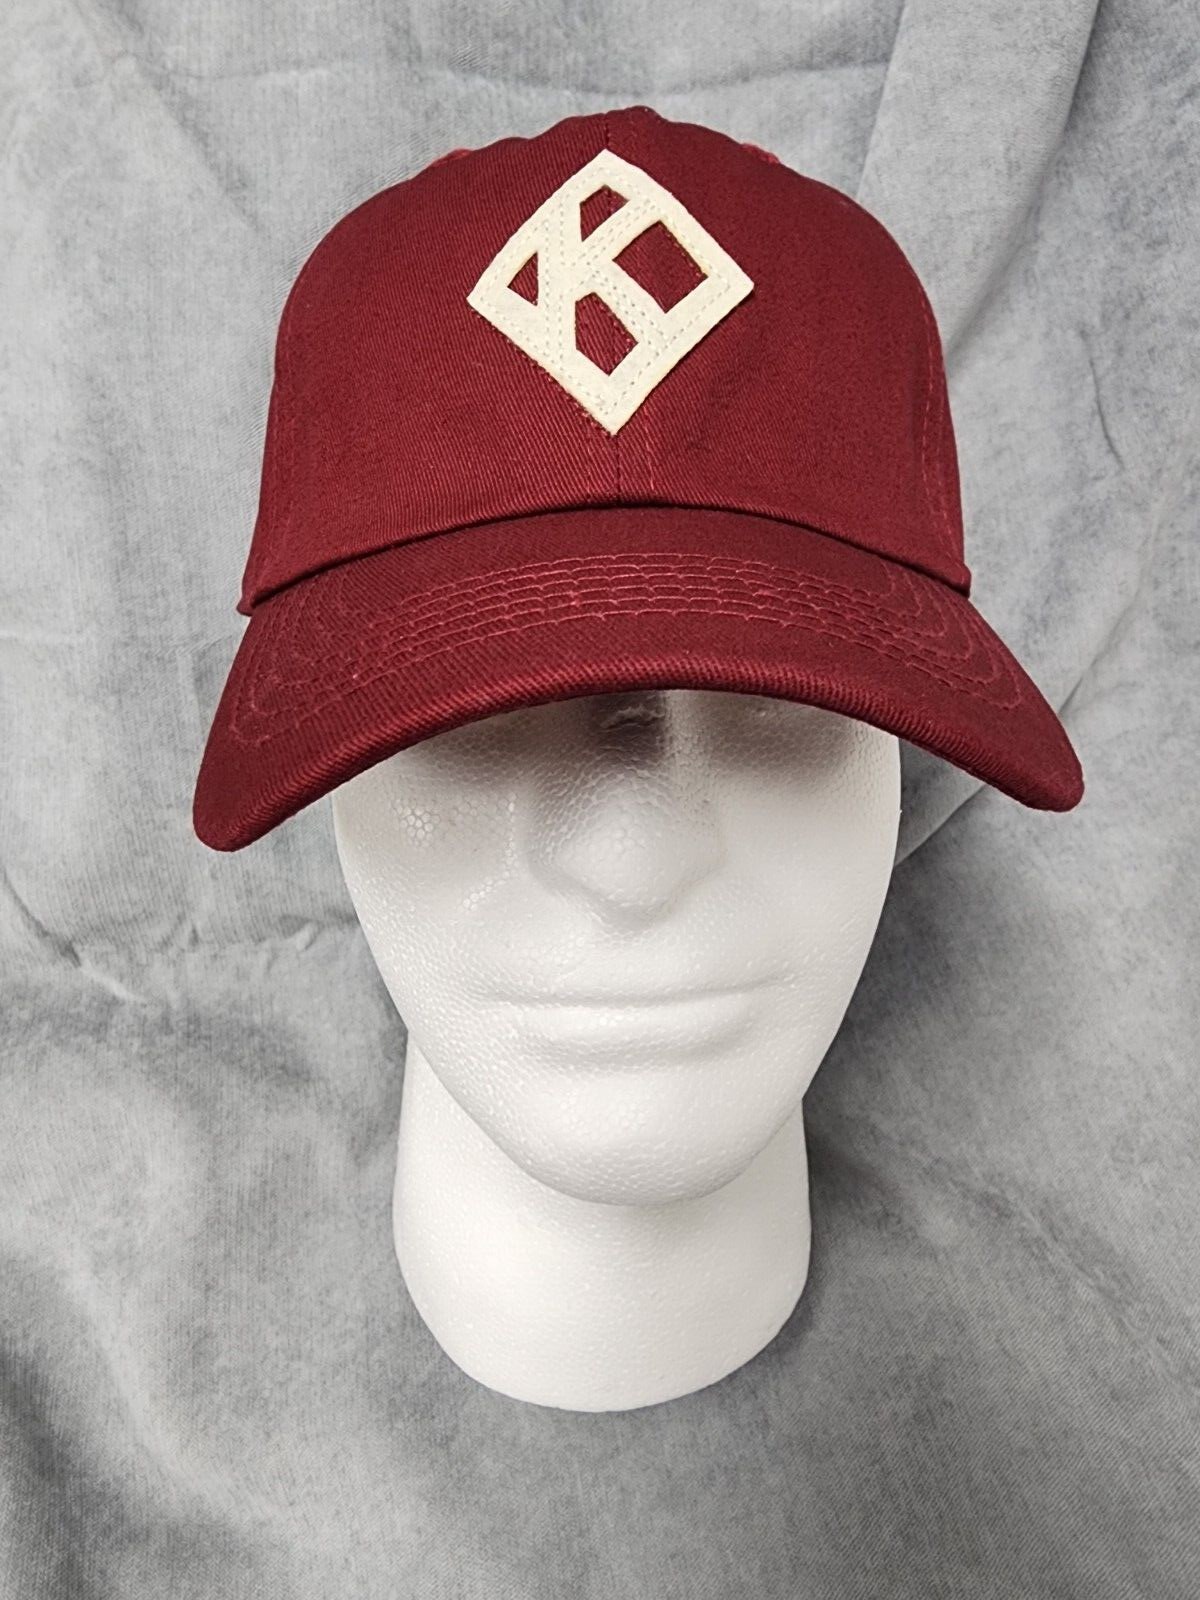 NEW KAPPA ALPHA PSI NUPE red cap W/ white DIAMOND K SPECIAL baseball Hat Greek